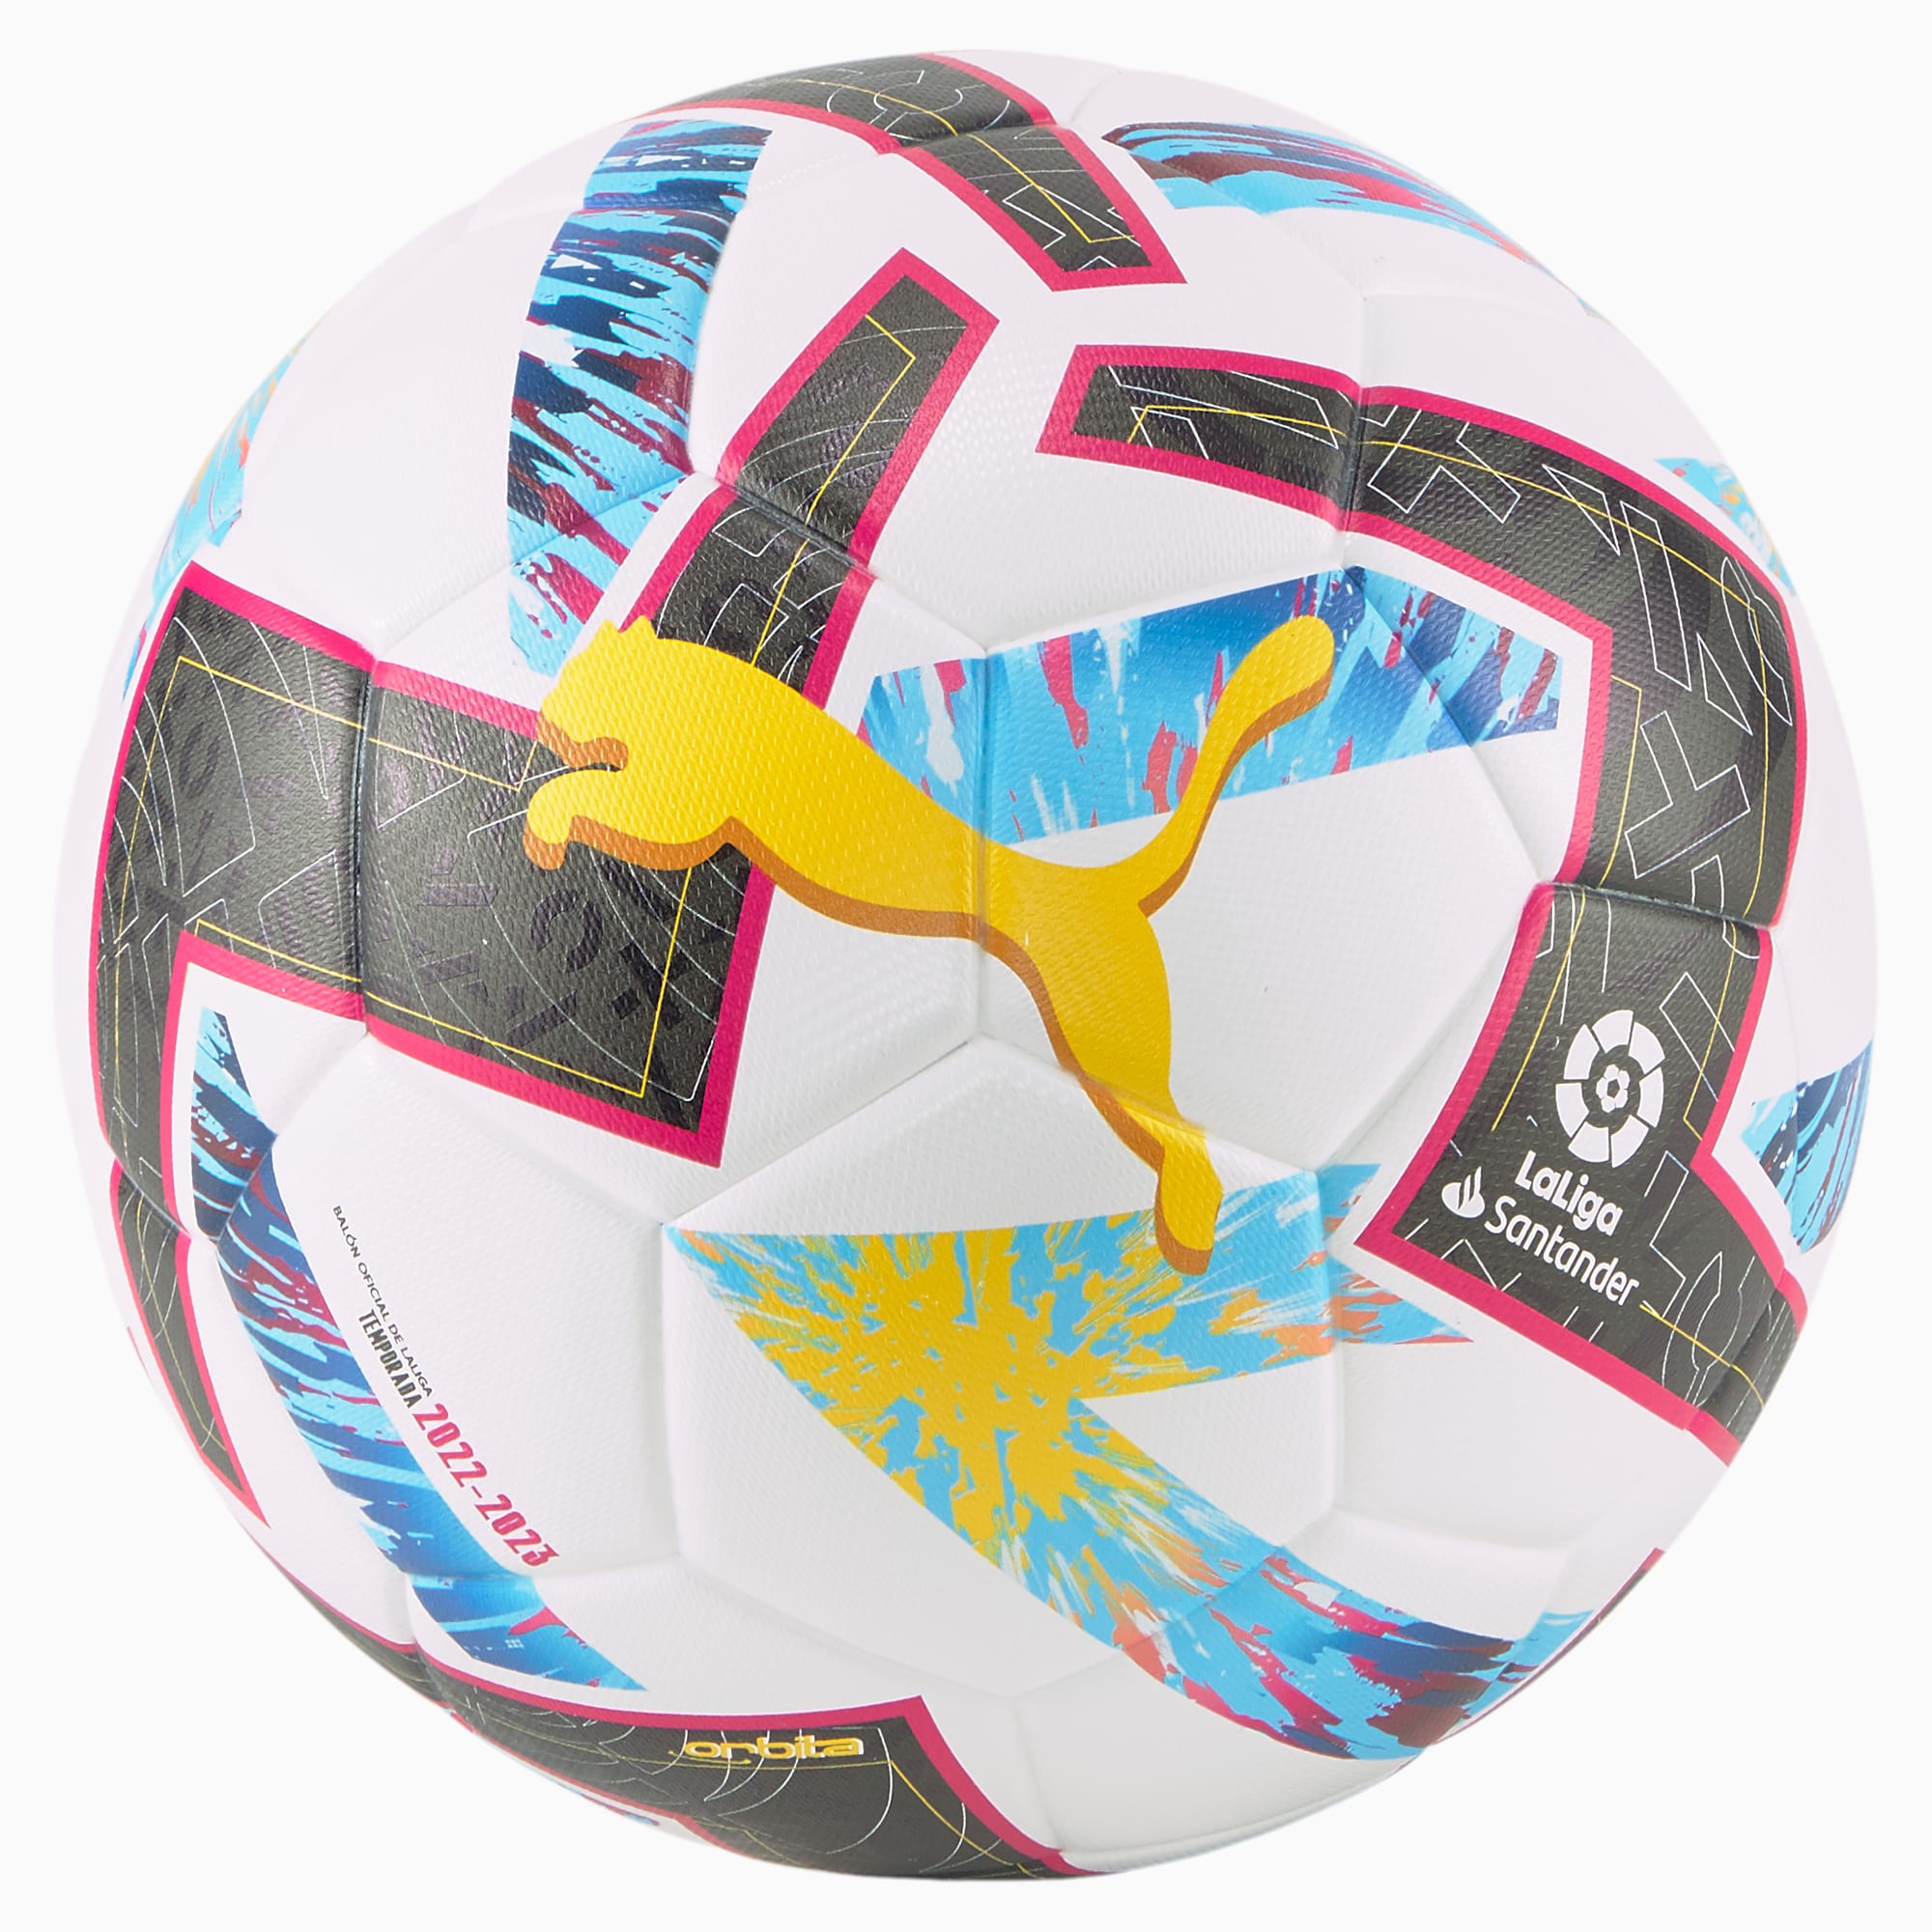 Orbita La Liga 1 FIFA Quality Soccer Ball